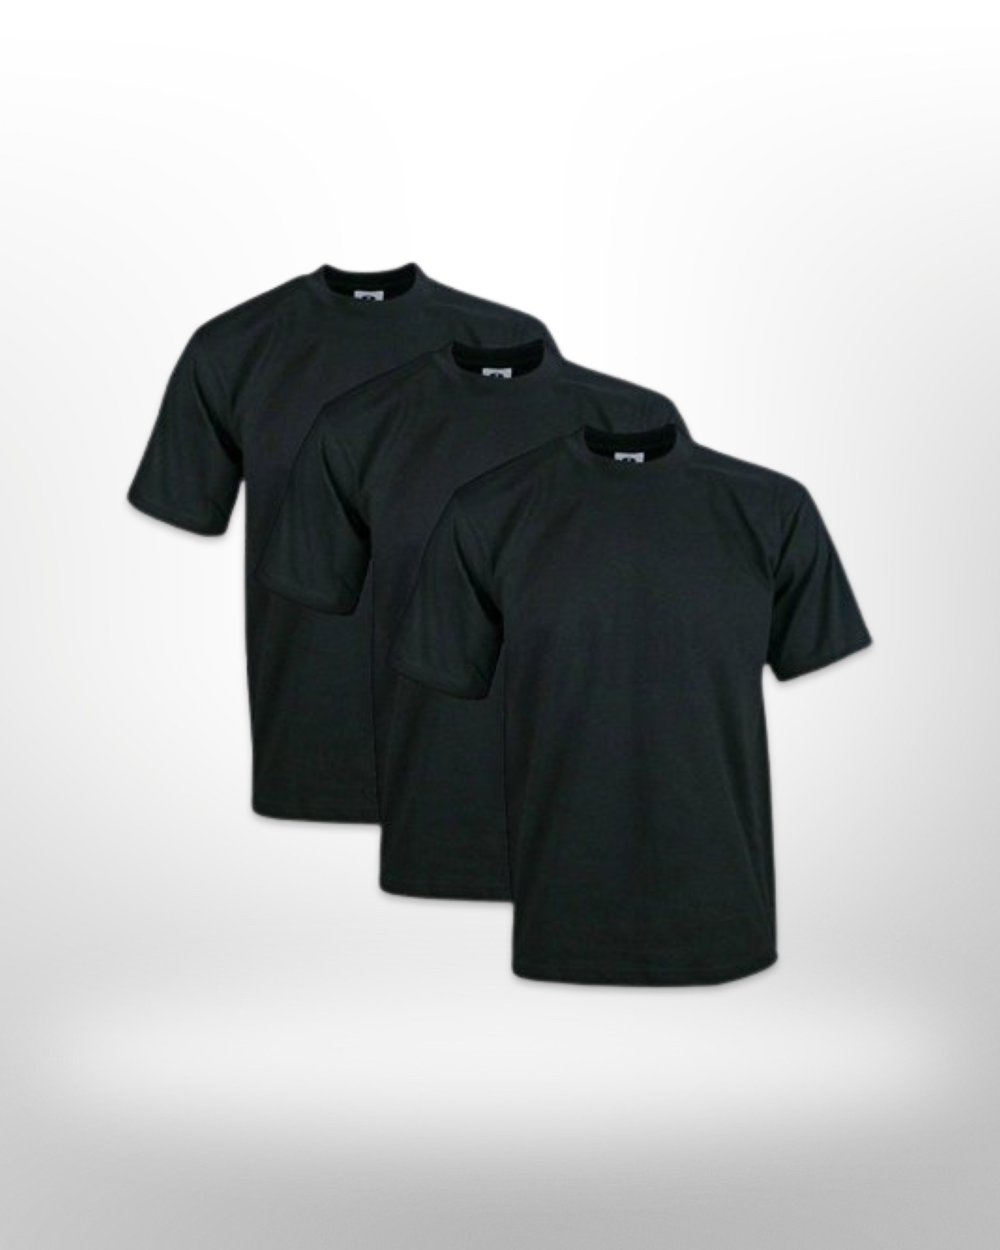 Pro Club Men's Heavyweight Cotton Short Sleeve Crew Neck T-Shirt 